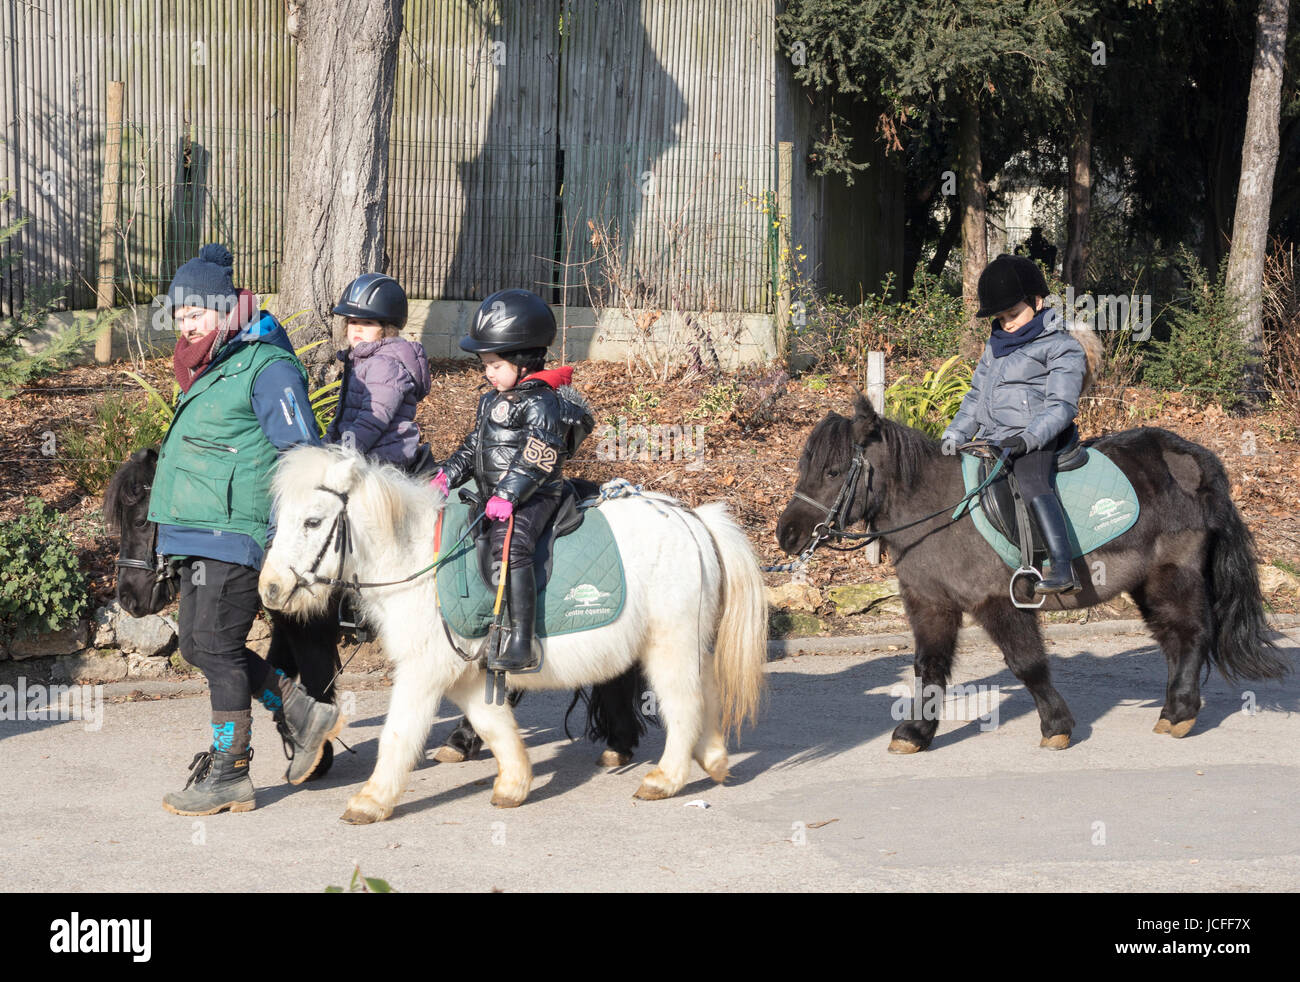 Kinder auf Shetland-Ponys vom Ponyclub, Jardin d ' Acclimatation, Bois de Boulogne, Paris, Frankreich Stockfoto